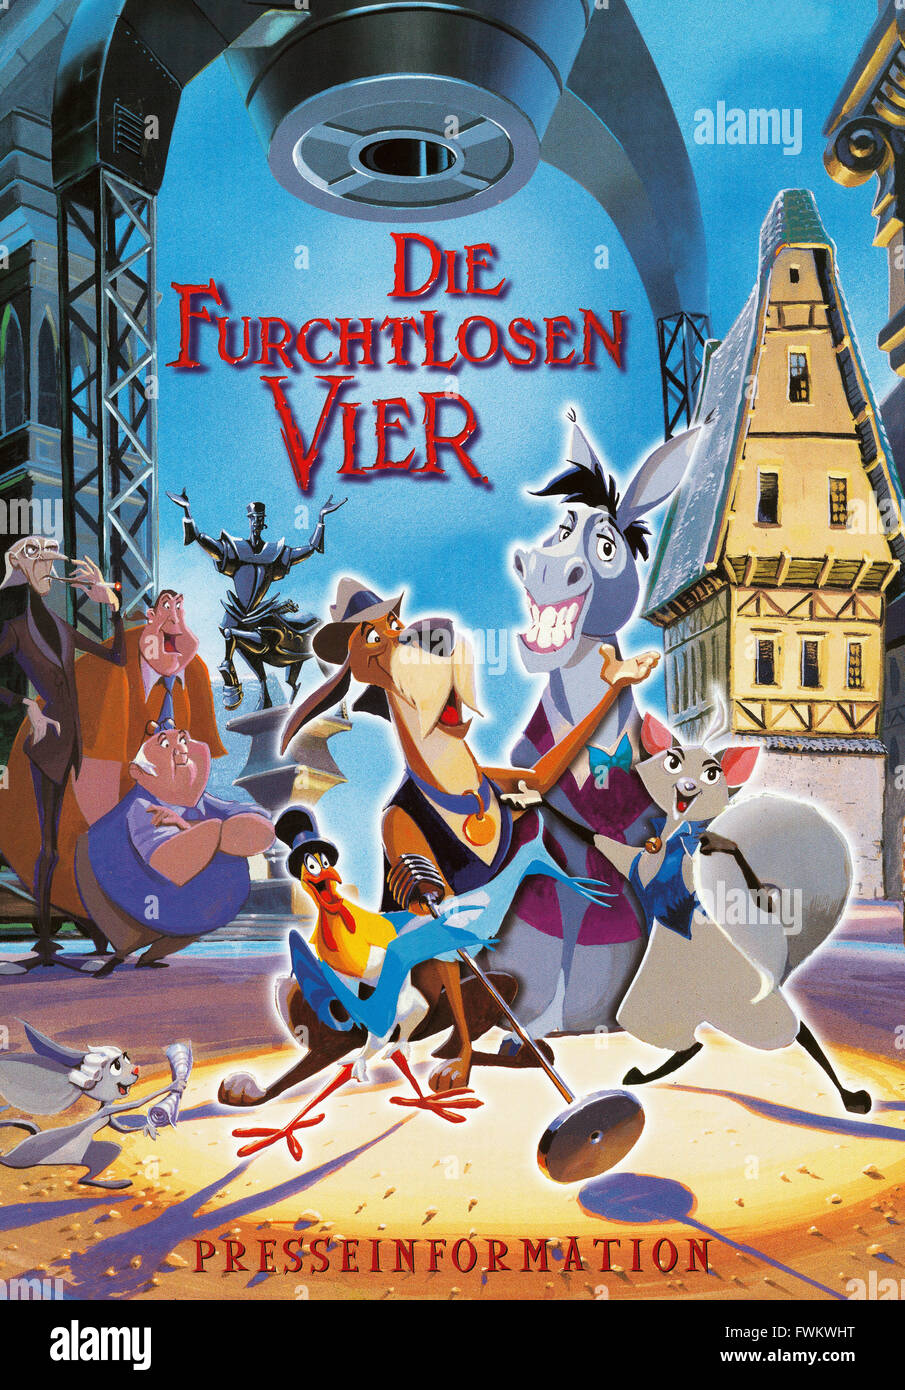 Die furchtlosen Vier, Trickfilm, Deutschland 1997, Regie: Michael Coldewey, Eberhard Junkersdorf, Szenenfoto Stock Photo